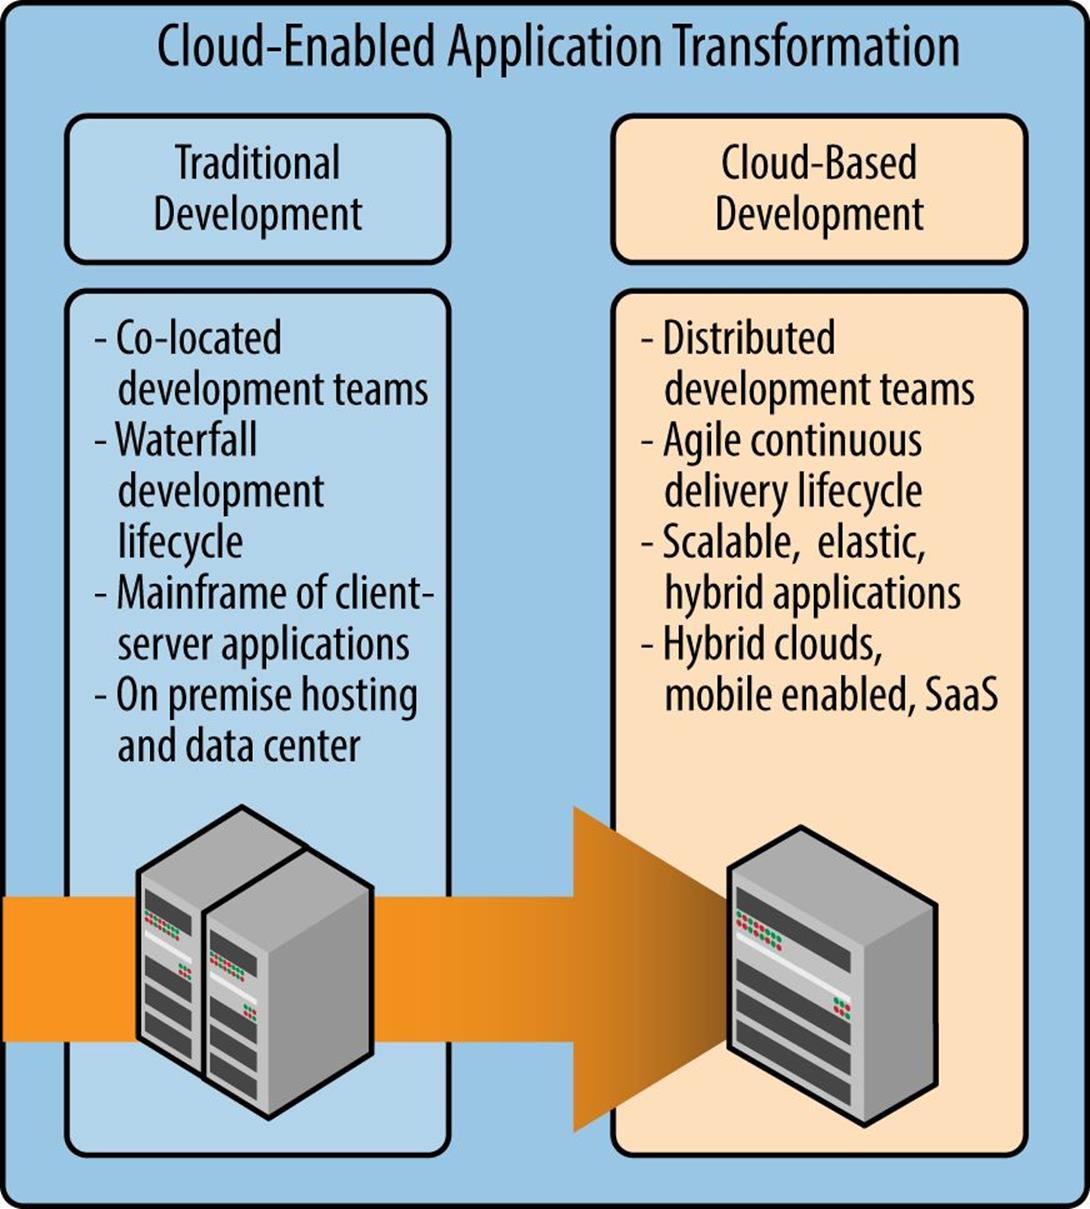 Cloud-based application development